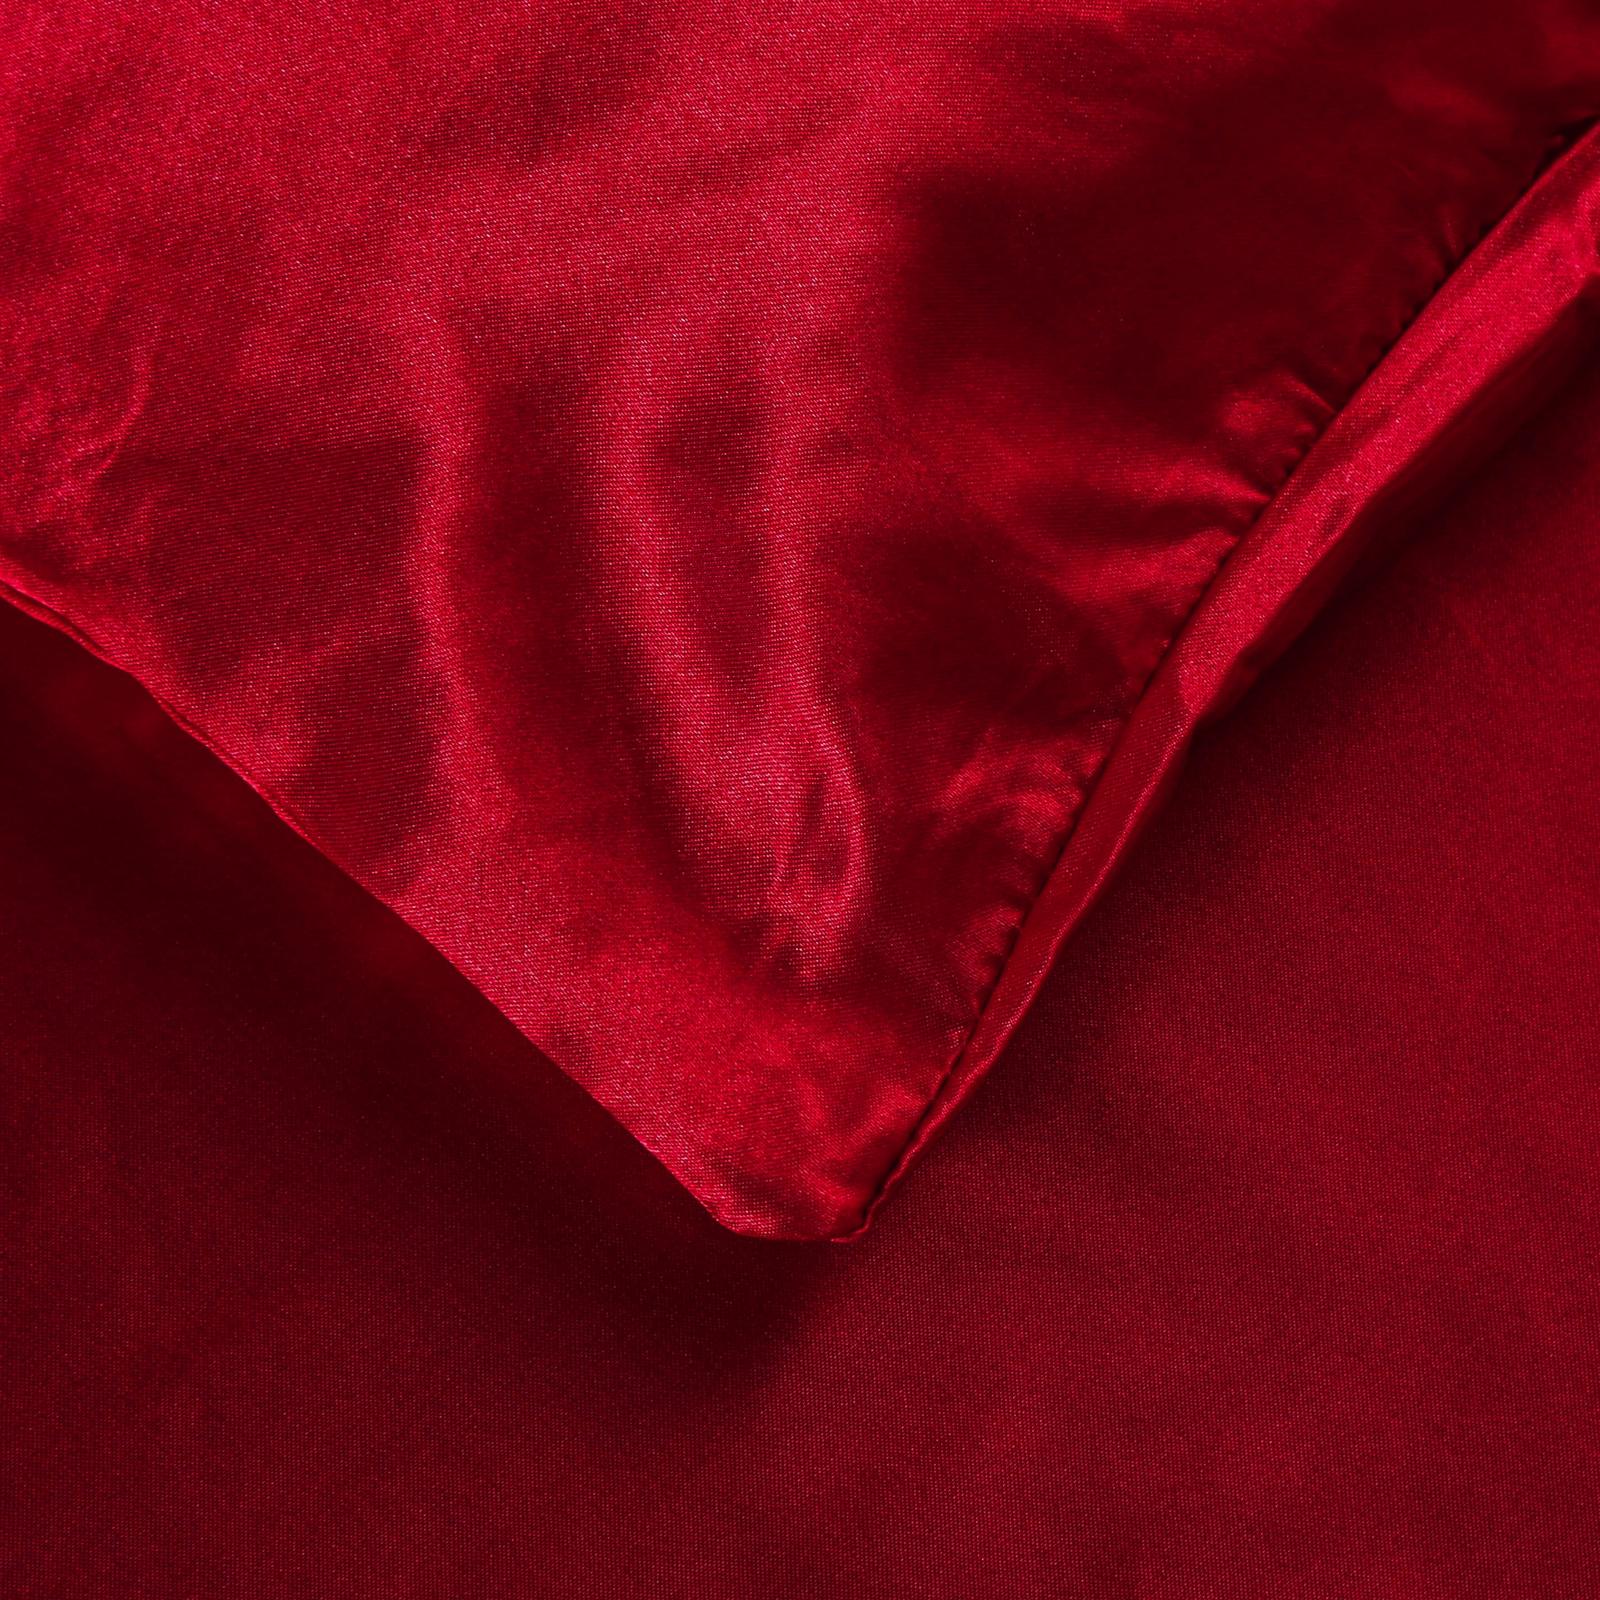 Red 4pc Satin Panel Single Bed Duvet Quilt Cover Set